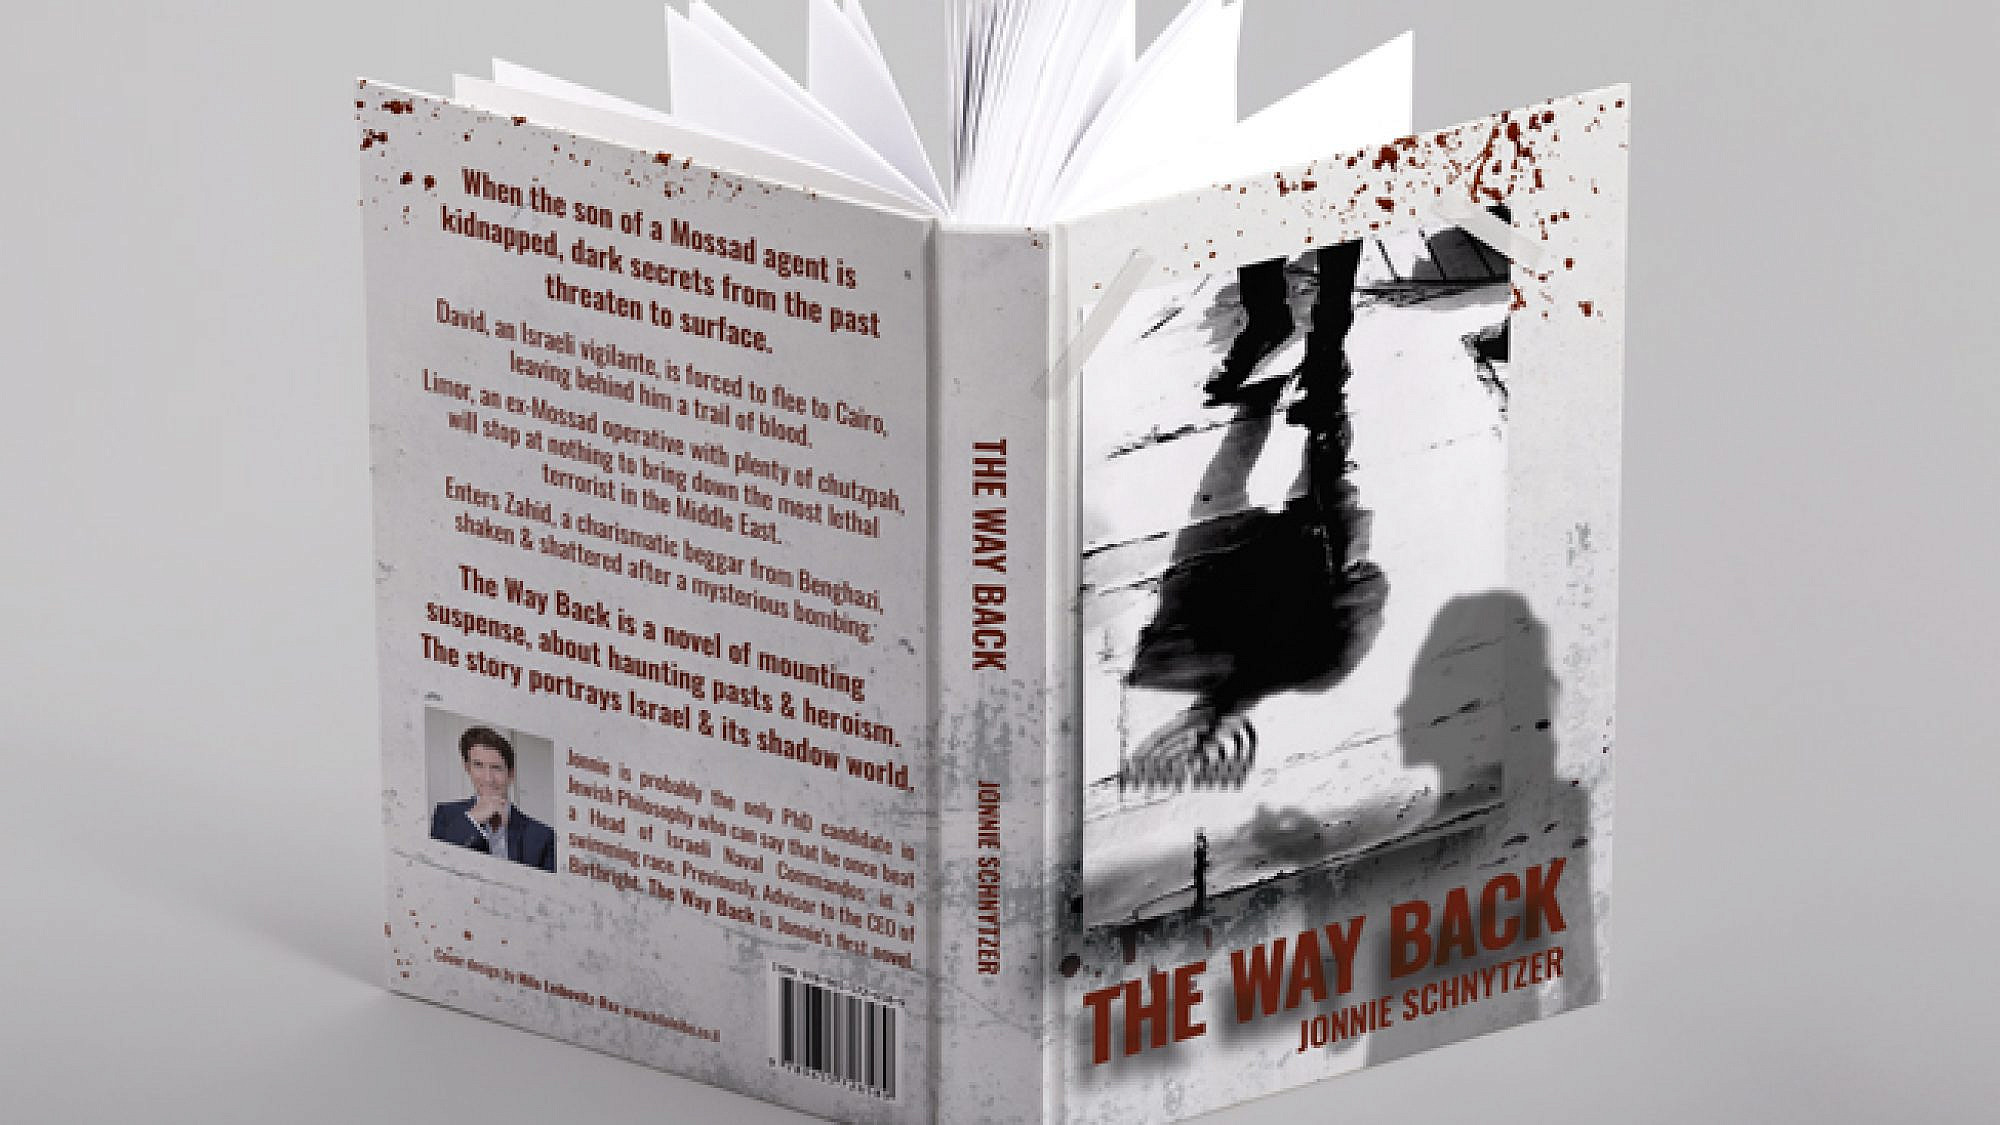 “The Way Back” by Jonnie Schnytzer